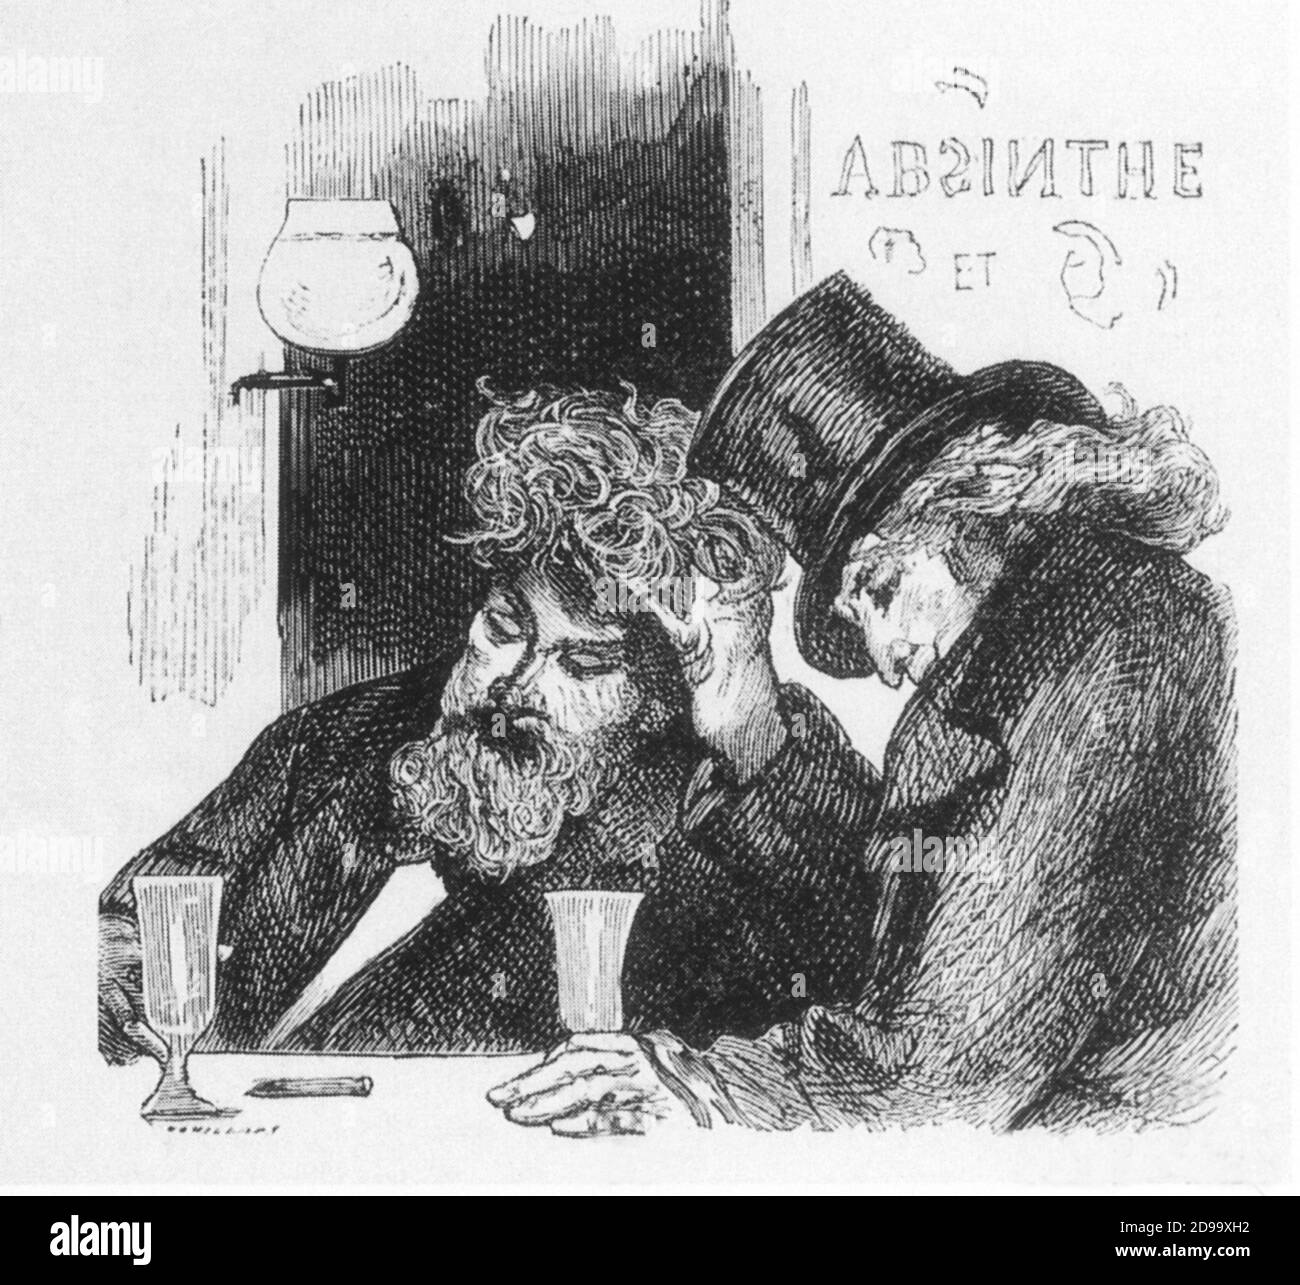 ' Buveurs d' Absinthe ' , by anonimous french artist of the 1870 's -   ABSINTHE - ASSENZIO - stupefacenti - droga - droghe - drug - drugs - allucinogeno - BOTANICA - BOTANY - tossicodipendente - assuefazione - alcolizzato - alcolismo - alcooholic - alcoholism - top hat - cappello a cilindro - BELLE EPOQUE - caffé - bar  ----  Archivio GBB Stock Photo